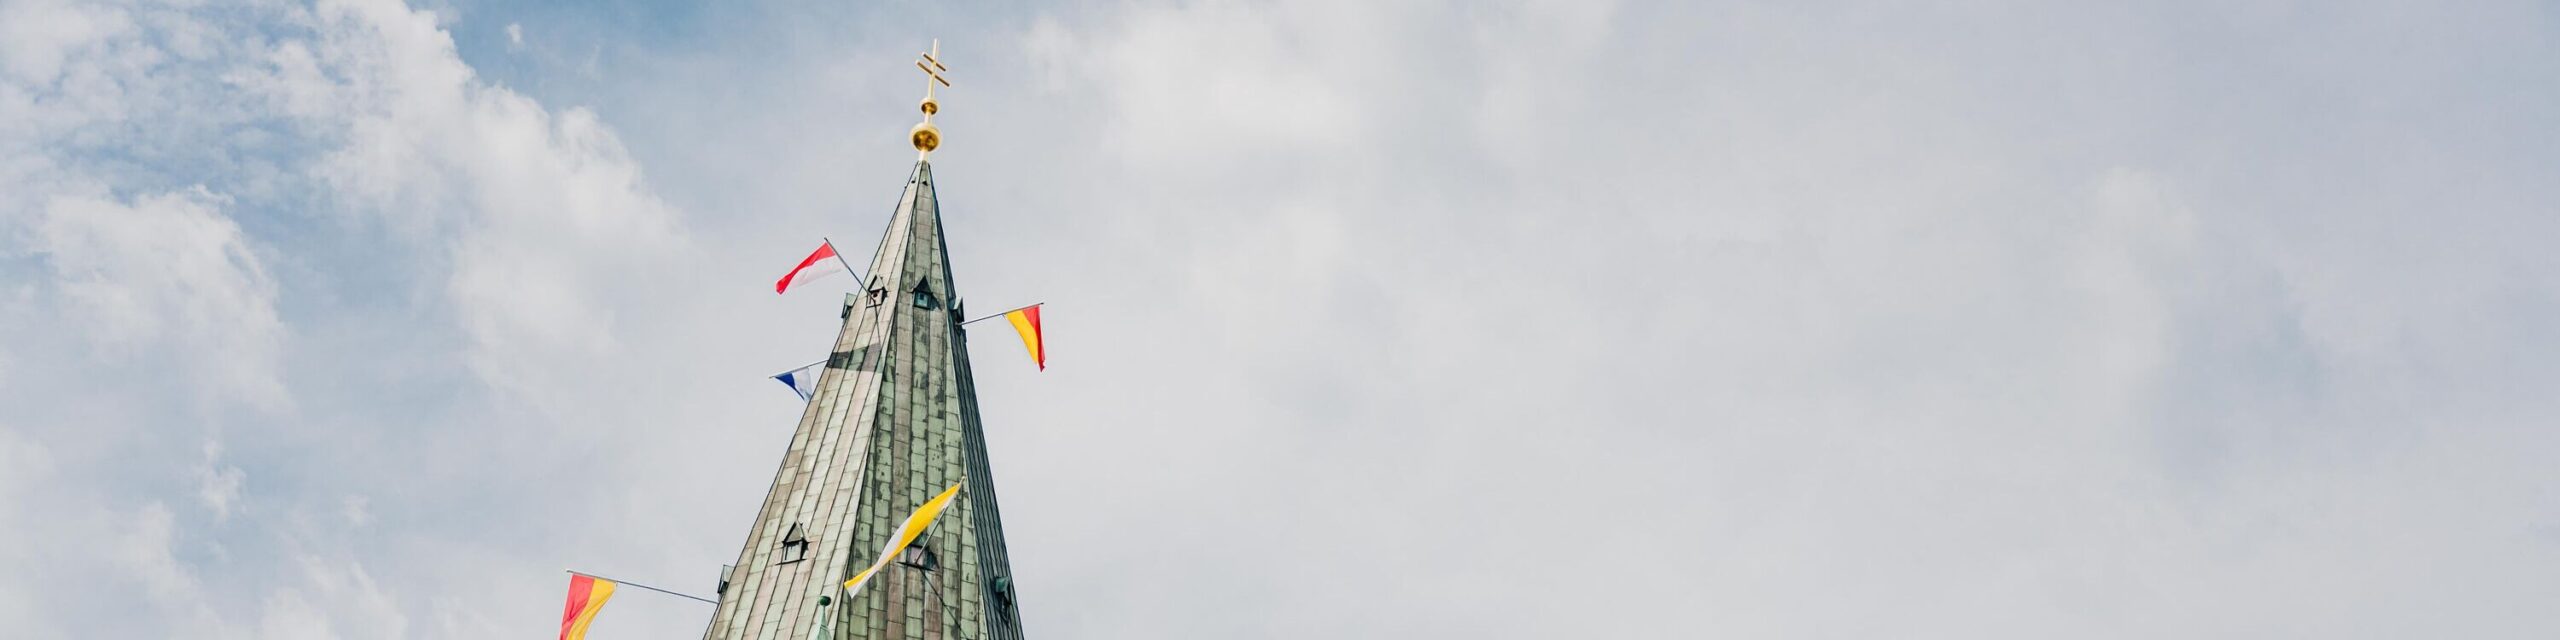 Fahnen am Turm des Hohen Doms zu Paderborn